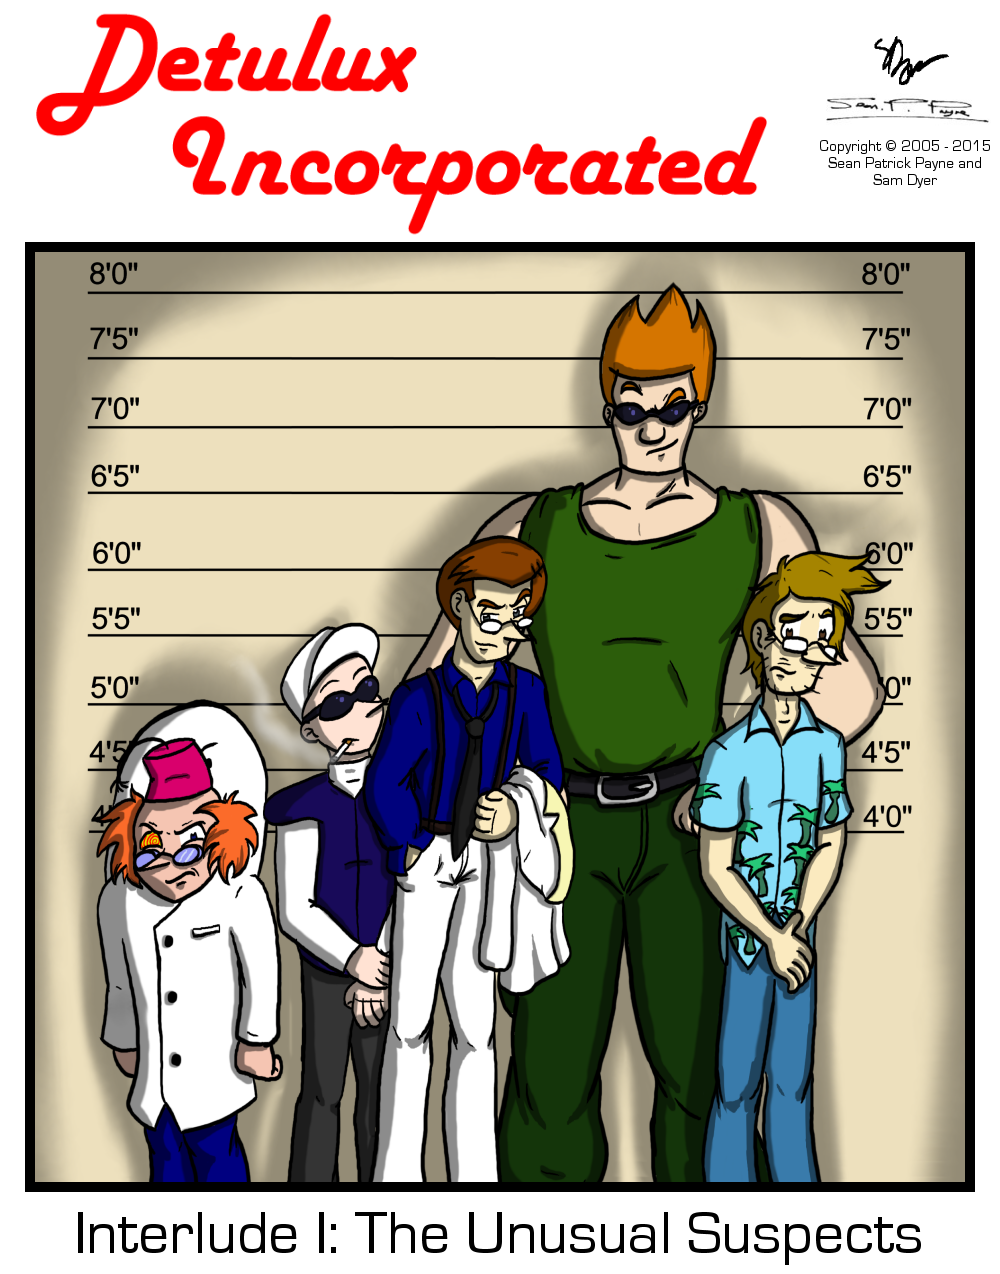 Interlude I: The Unusual Suspects